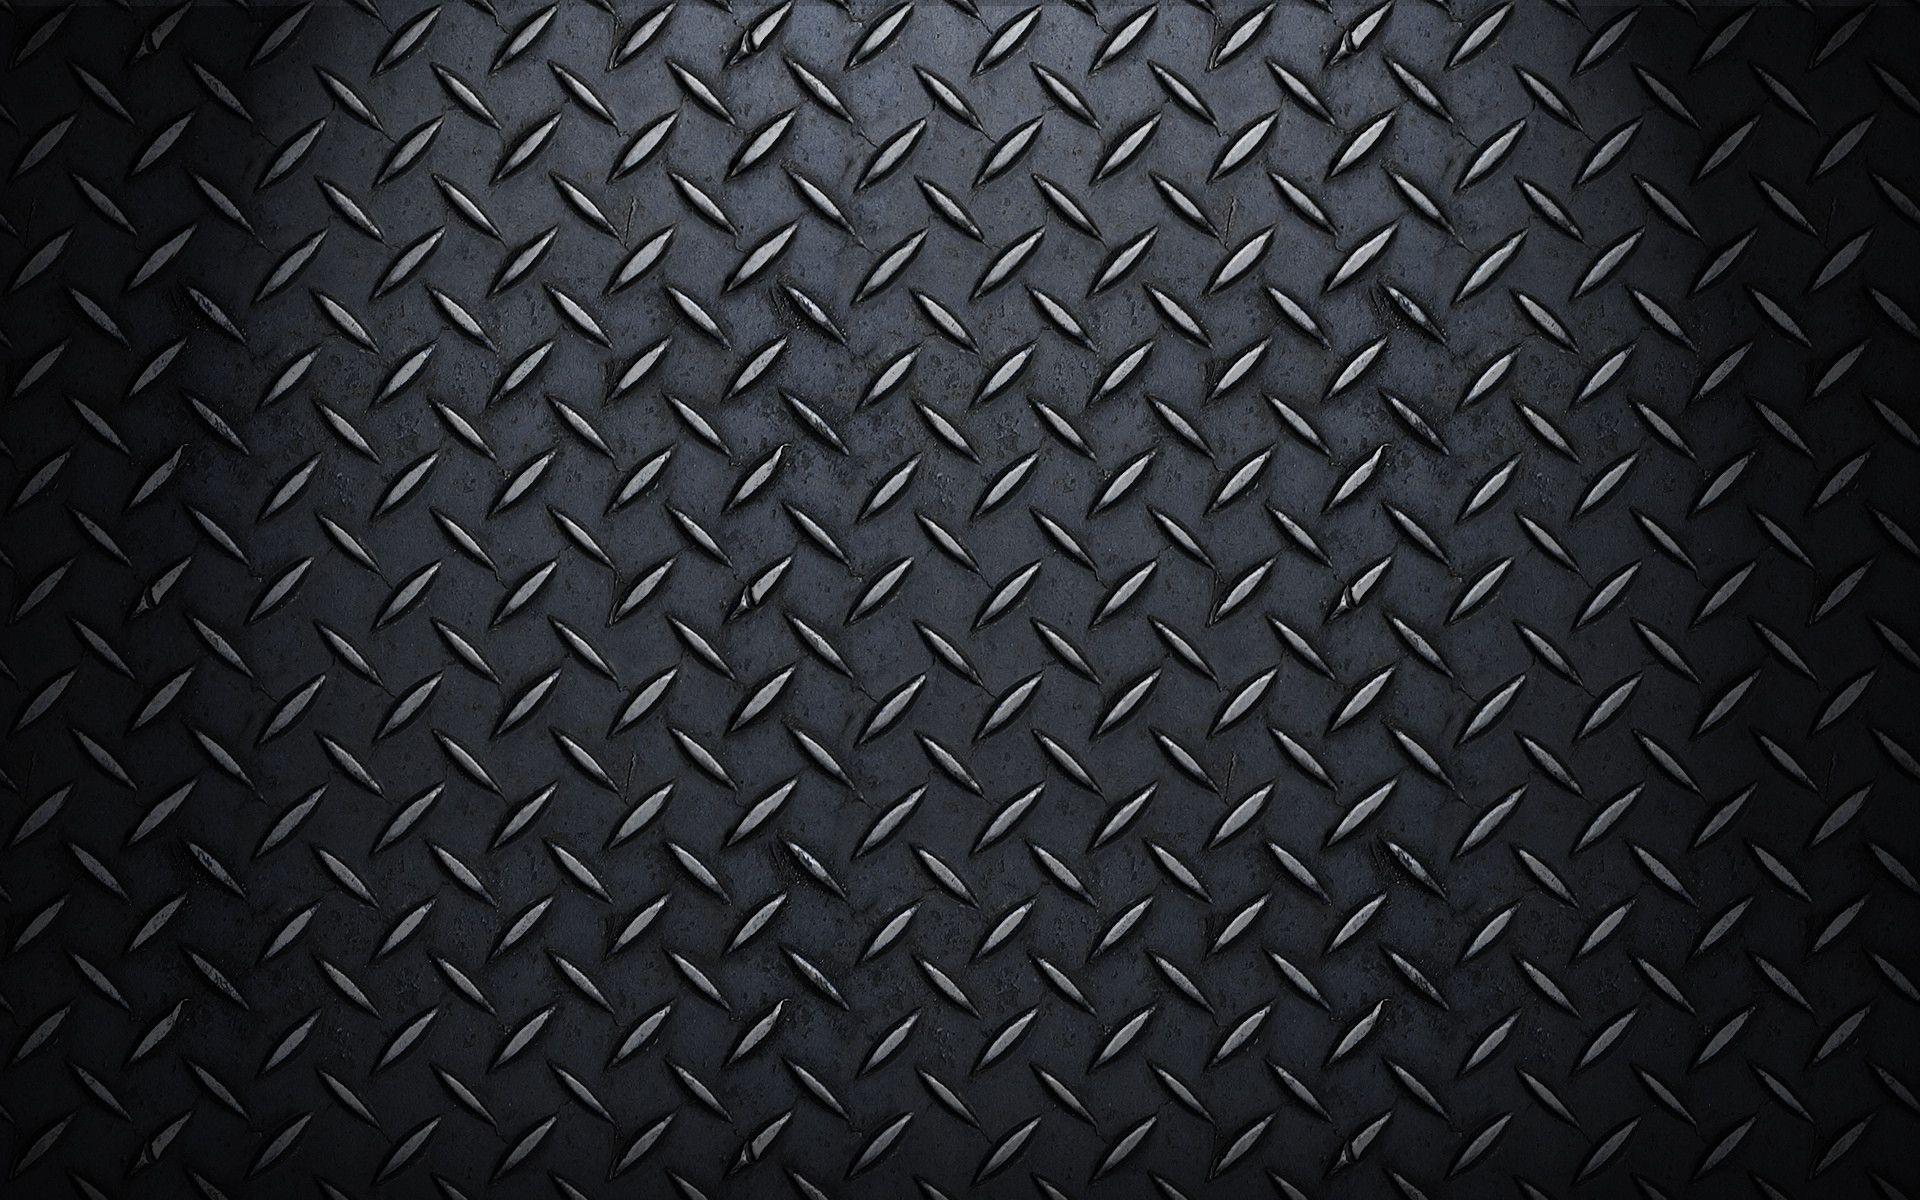 Steel Wallpaper, HD Steel Wallpaper and Photo. View 4K Ultra